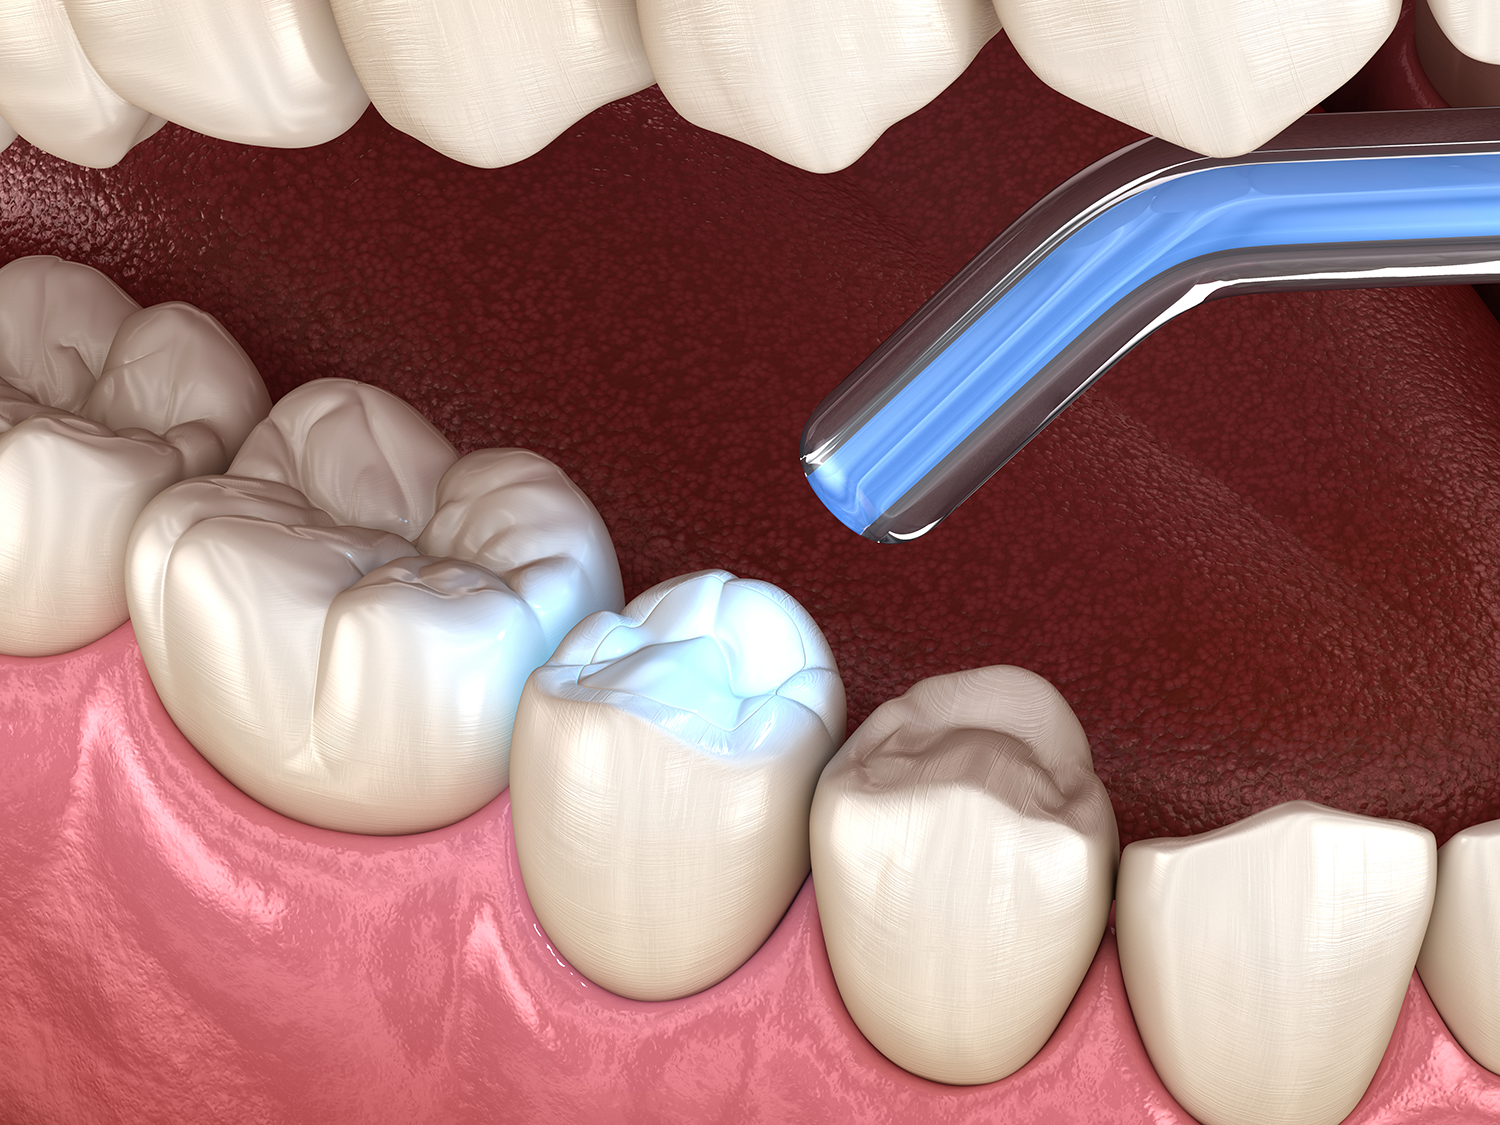 dental bonding of model teeth